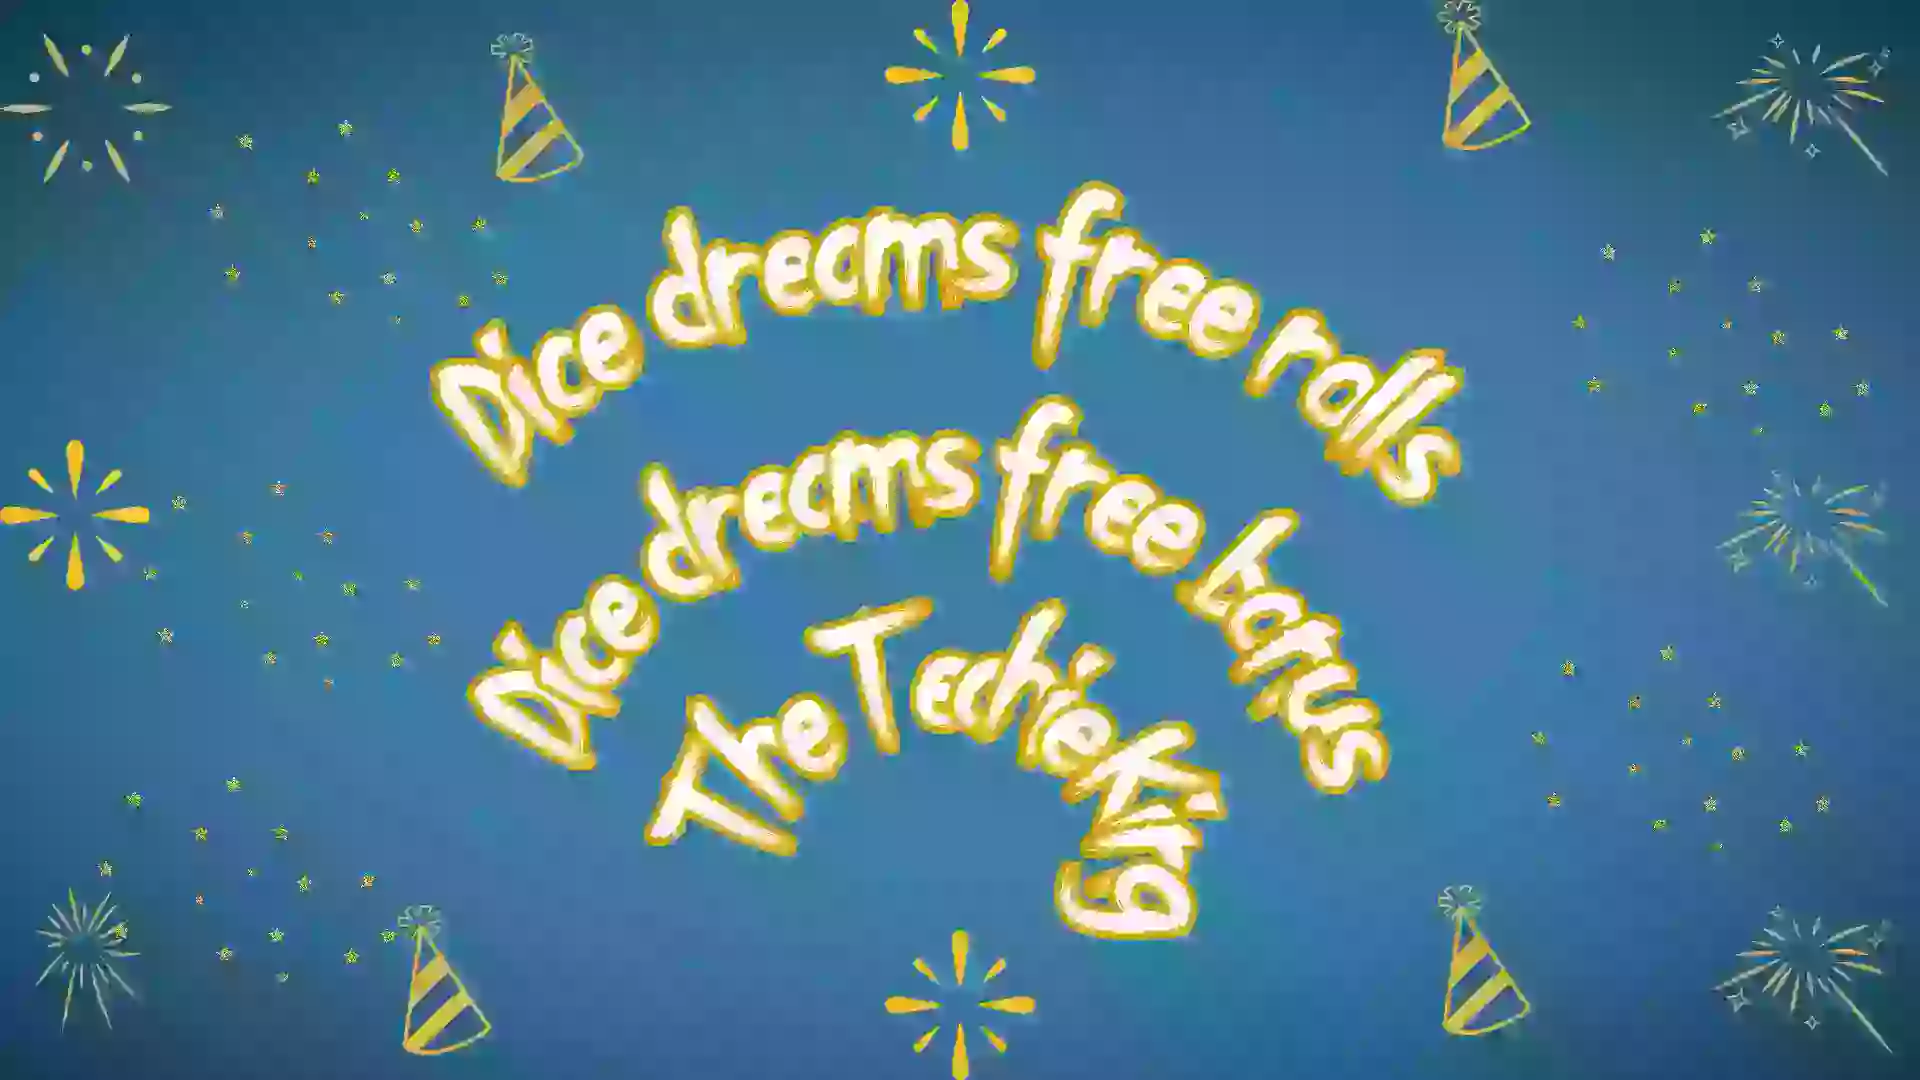 Dice dreams free rolls